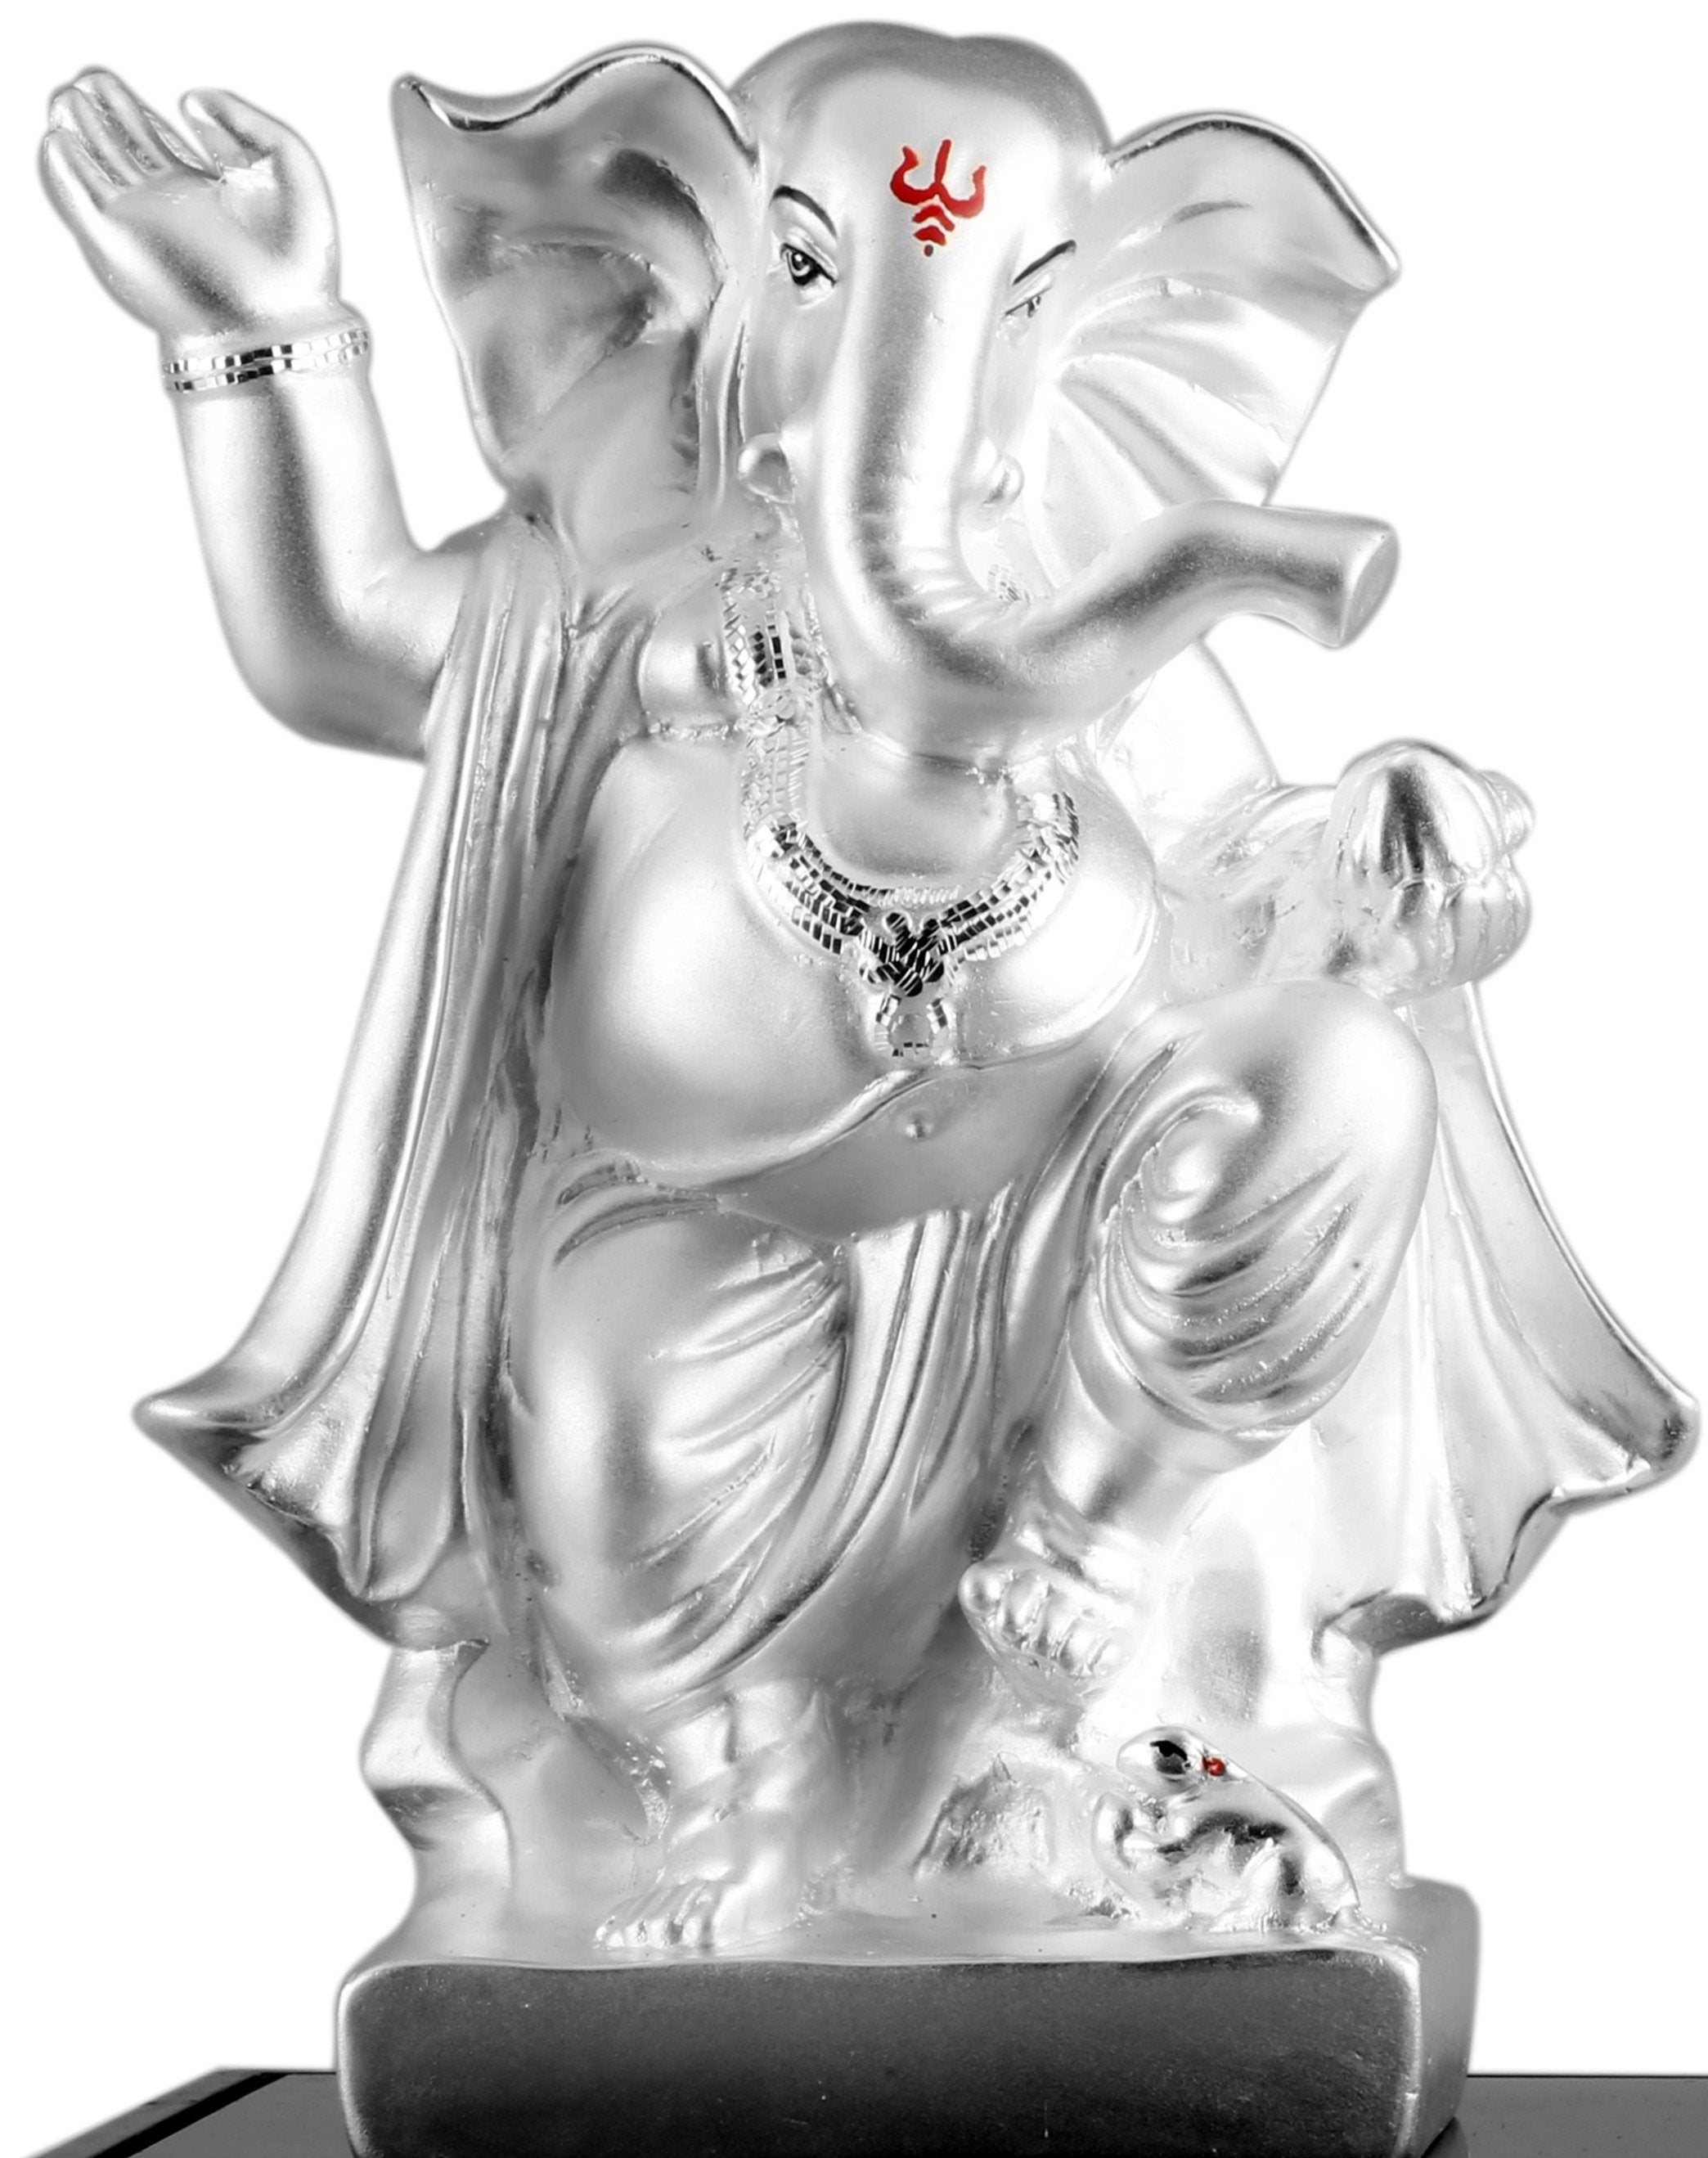 999 Pure Silver Ganesha Idol By Krysaliis Isvara - Krign44 Idols